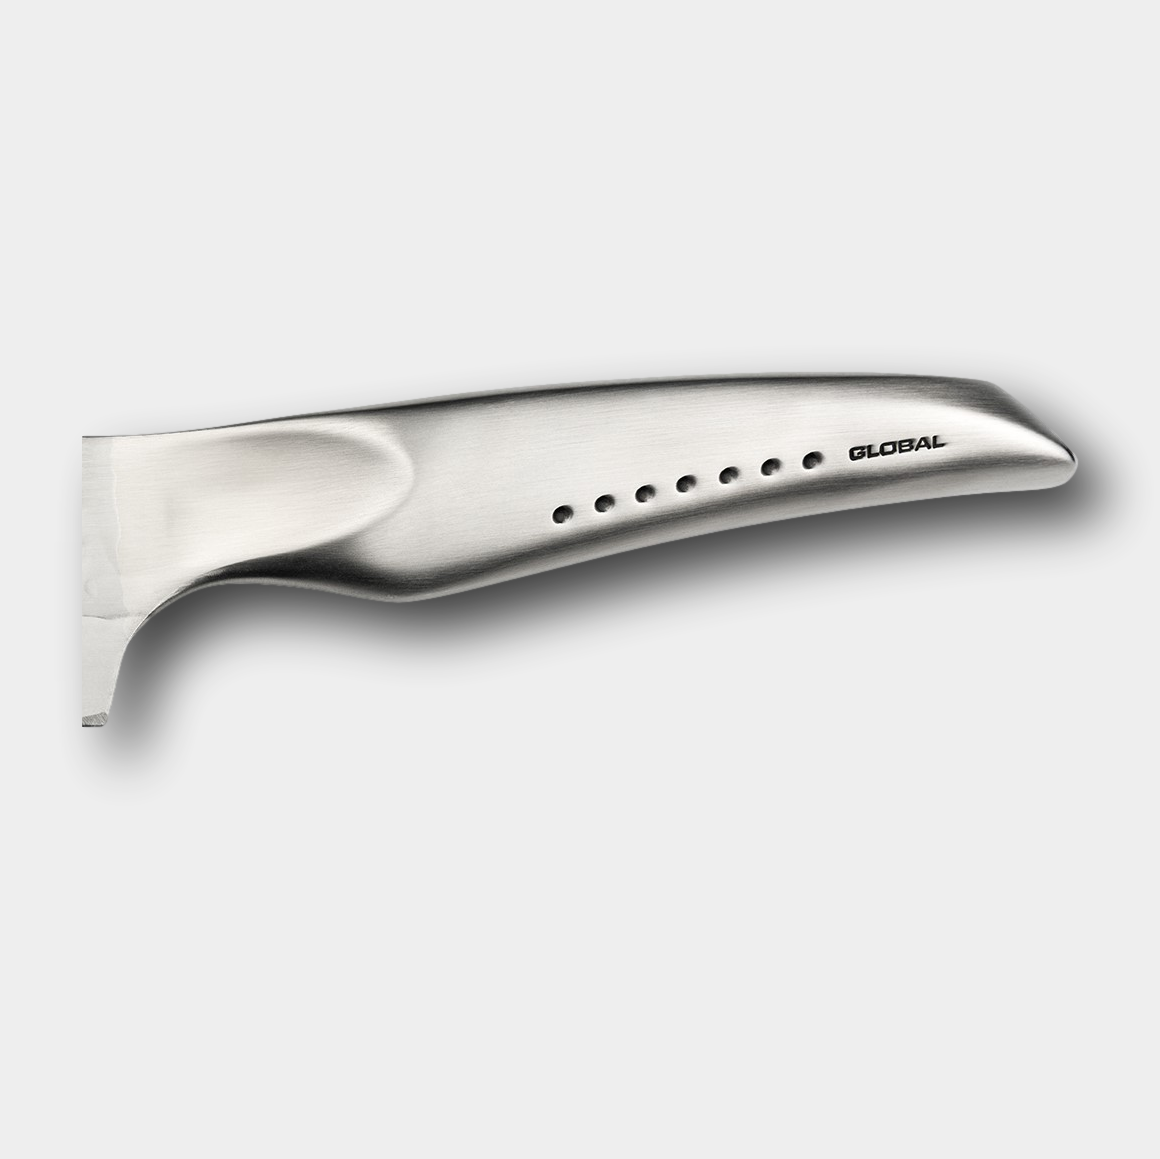 Global Sai Utility Knife 15cm